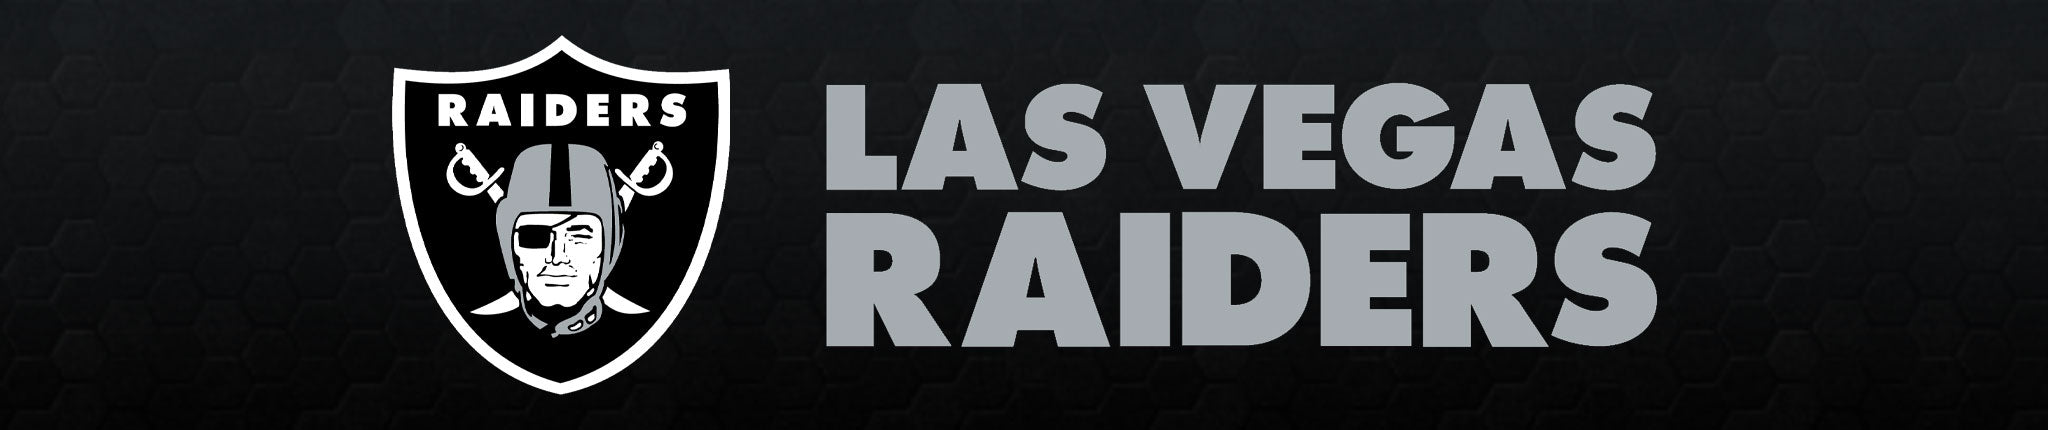 Las Vegas Raiders Custom Name HD Apple Watch Band - Game Time Bands